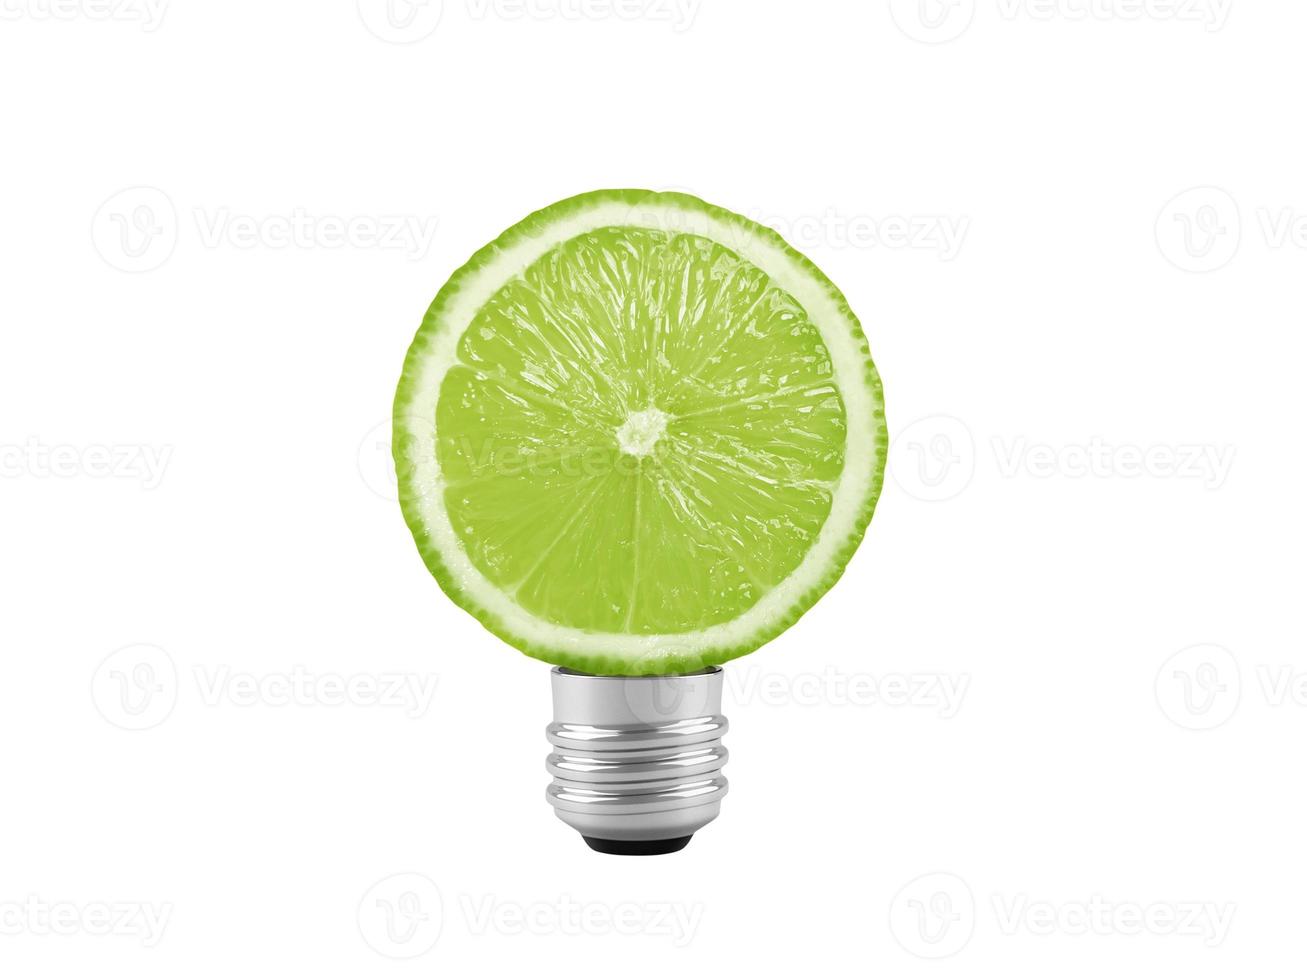 Green Lemon light bulb on white background. health and beauty concept photo